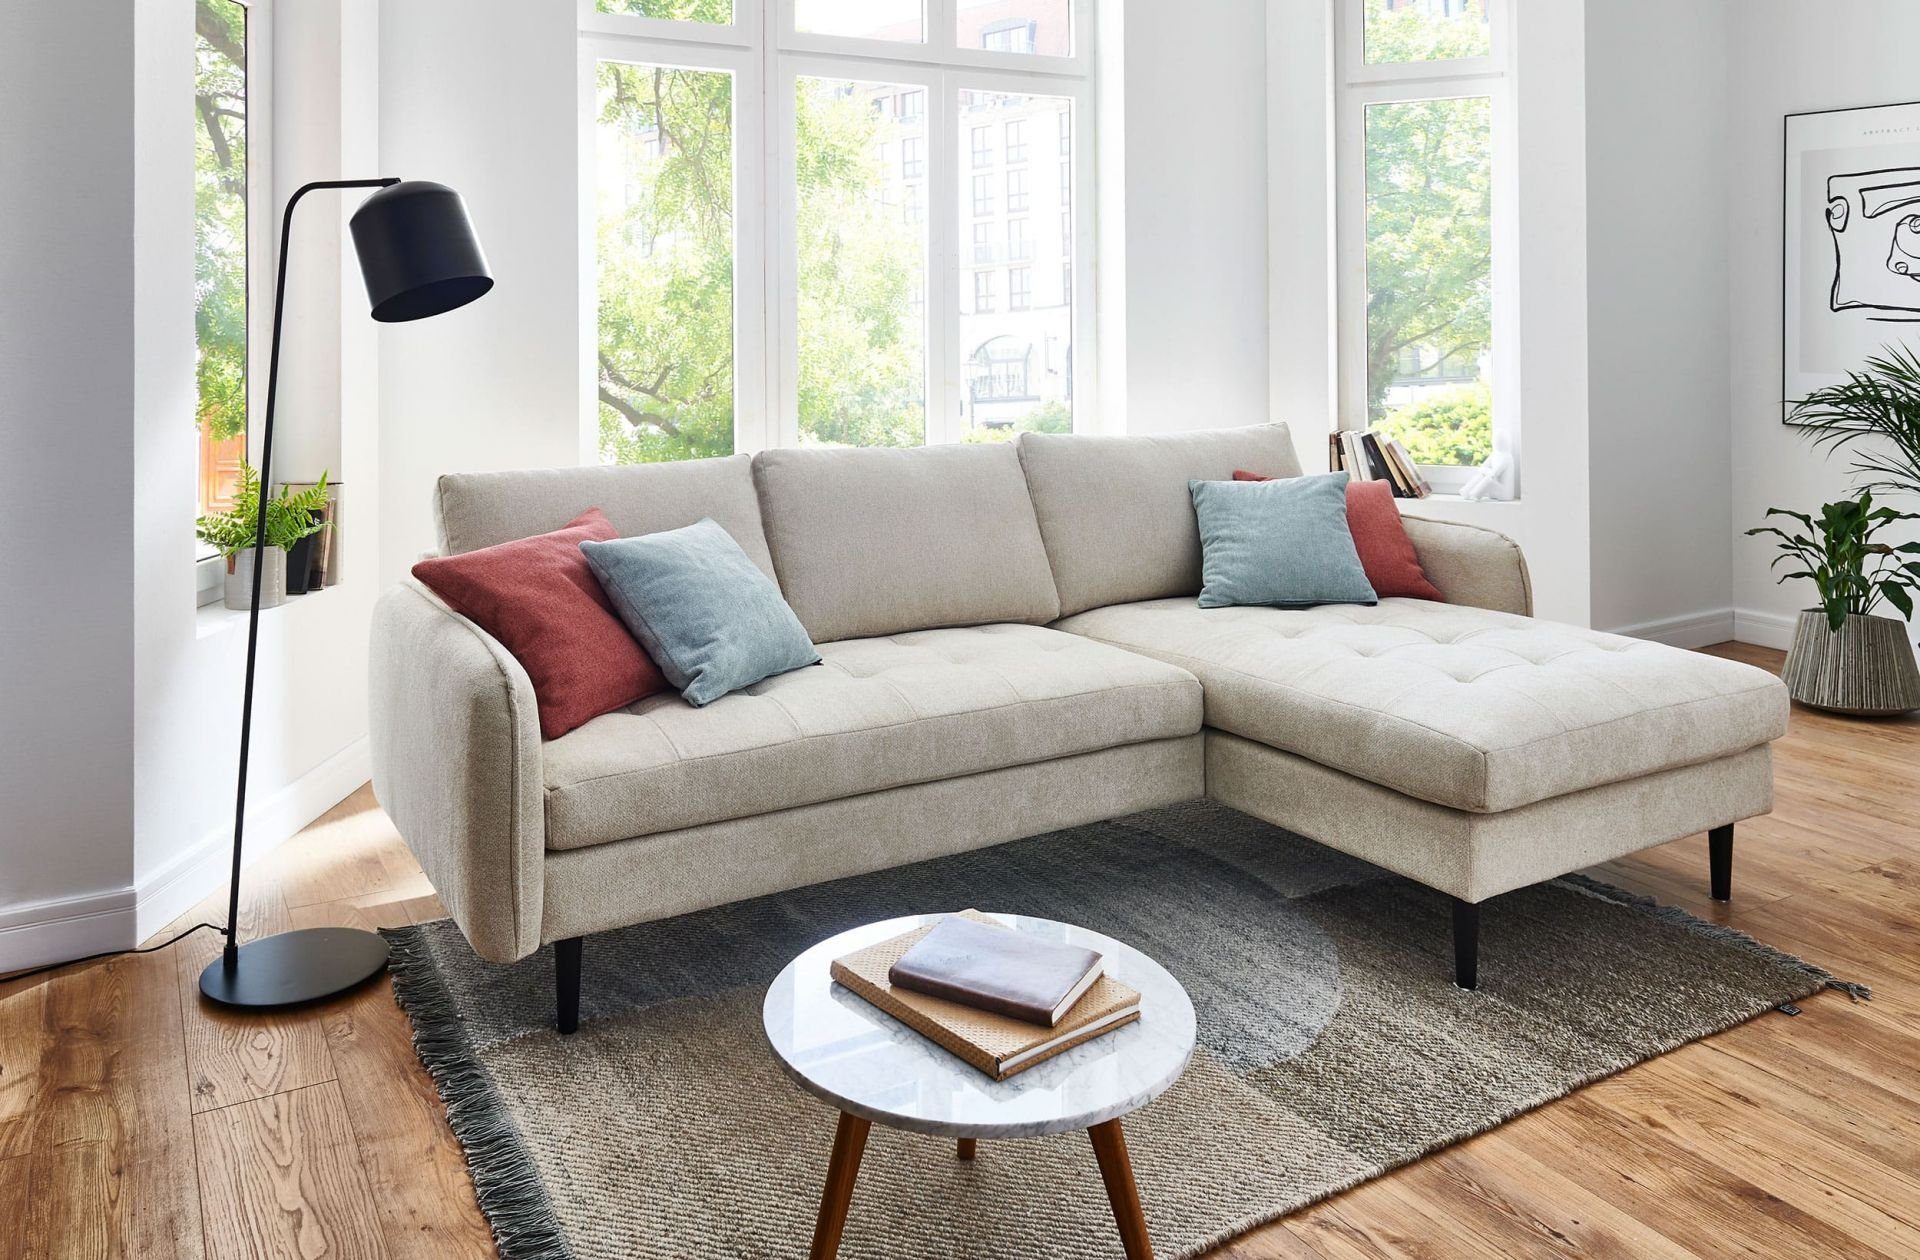 Home 124x154x86cm Ecksofa creme Ecksofa Couch Orleans« LC Sitzecke »New Sofa